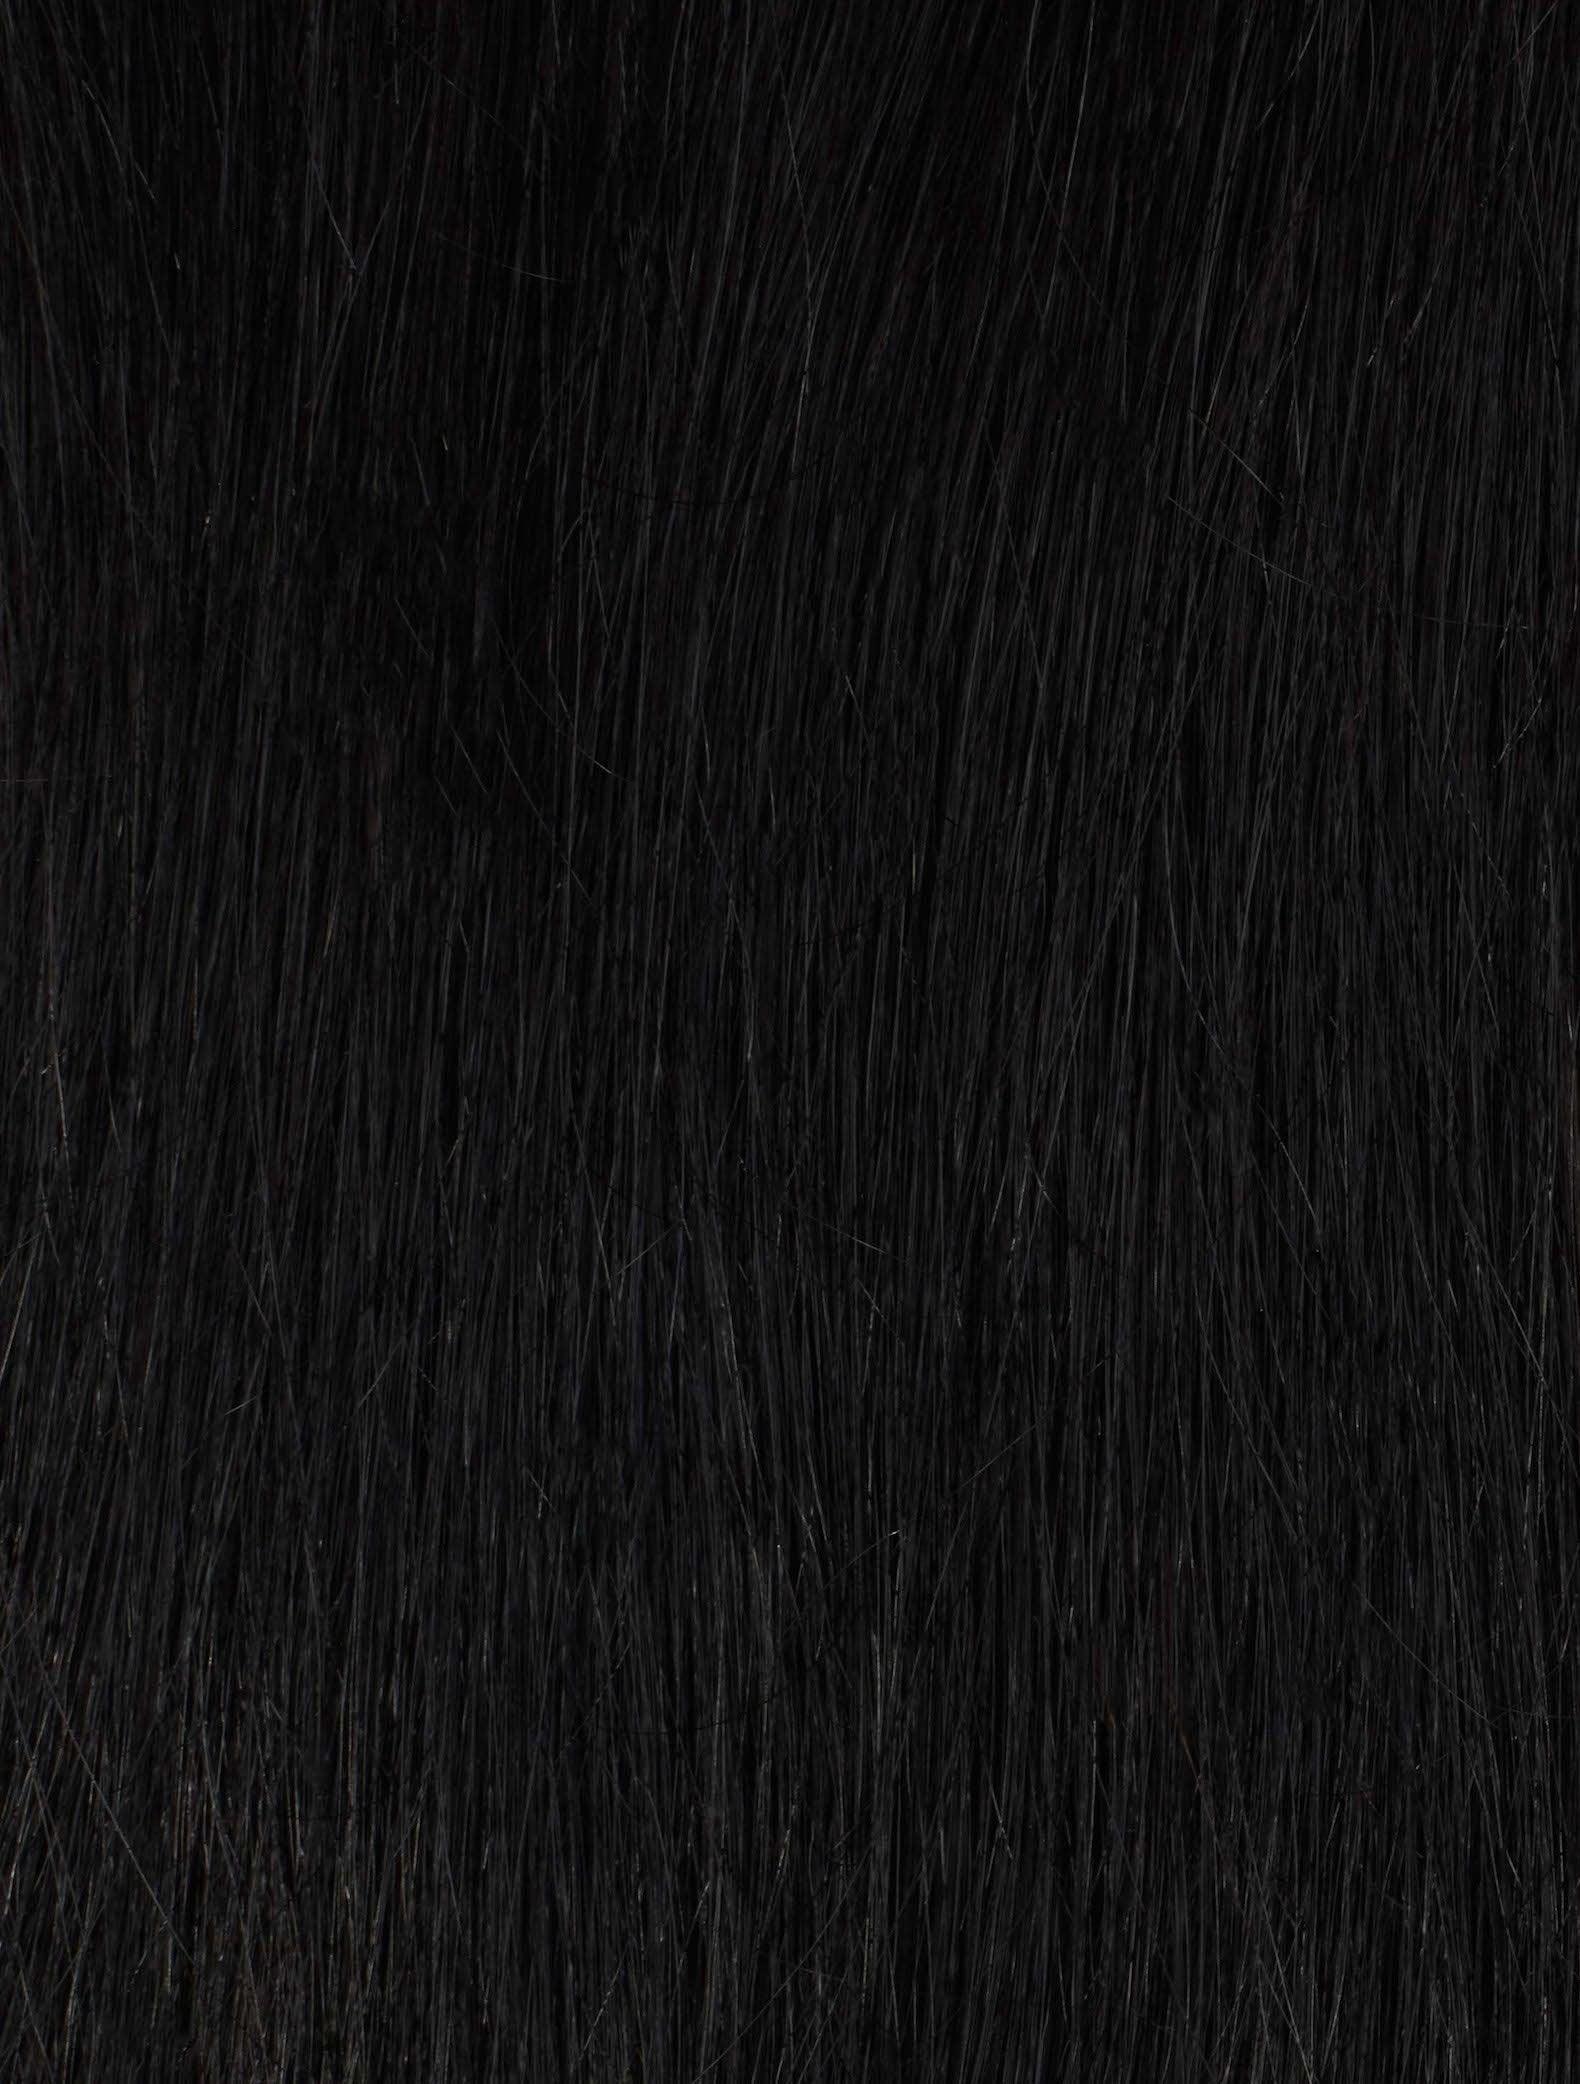 Jet Black (1) Seamless – Bombay Hair Canada